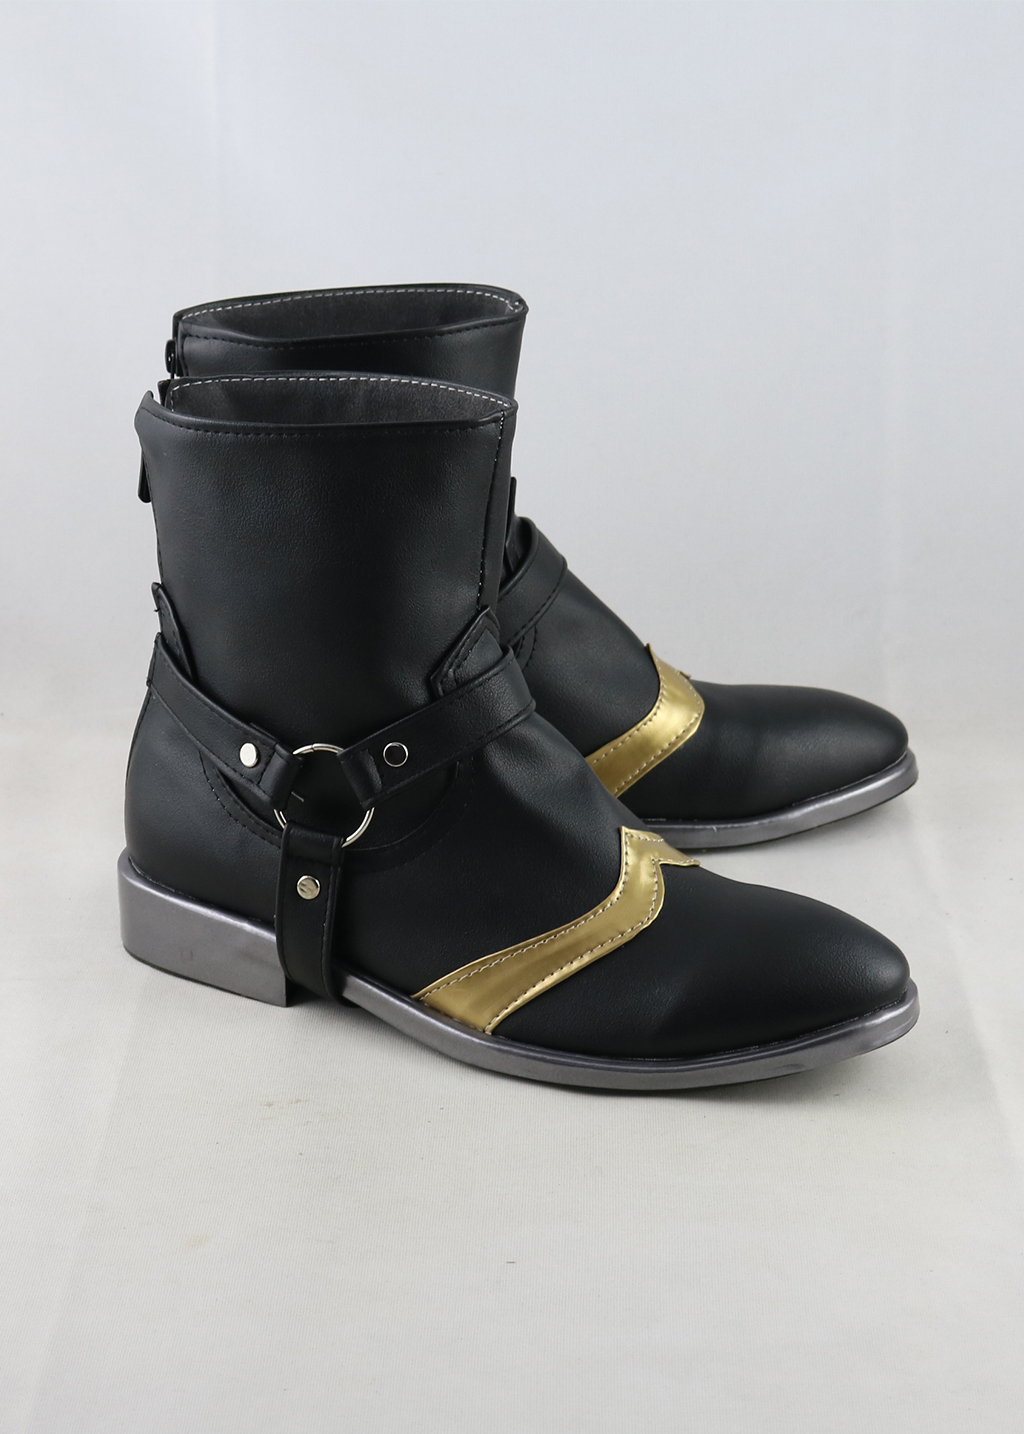 Leona Kingscholar Shoes Cosplay Men Twisted Wonderland Boots Black